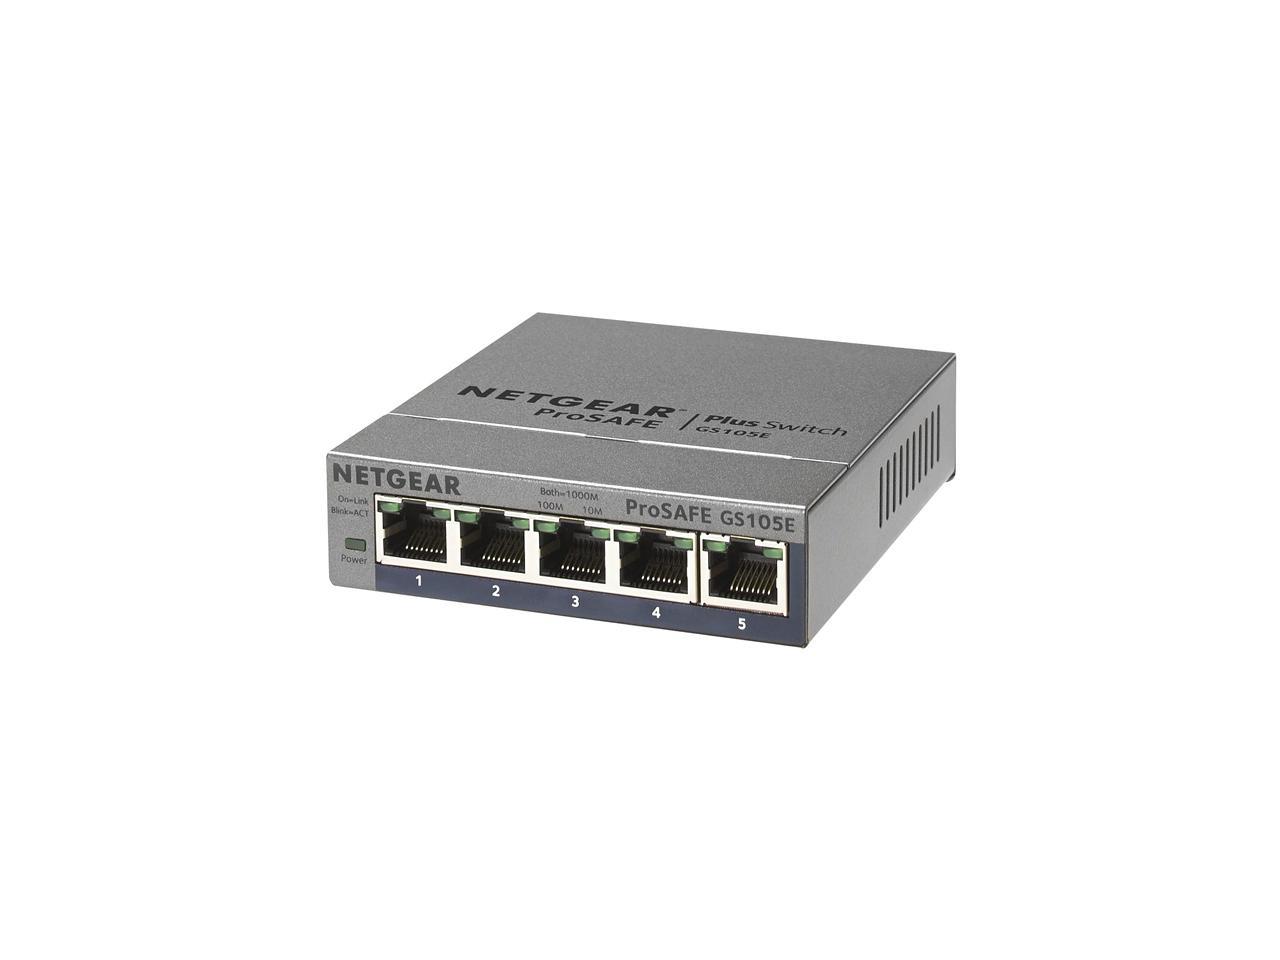 Switch NEW NETGEAR ProSAFE GS105Ev2 5-Port Gigabit Web Managed Plus 